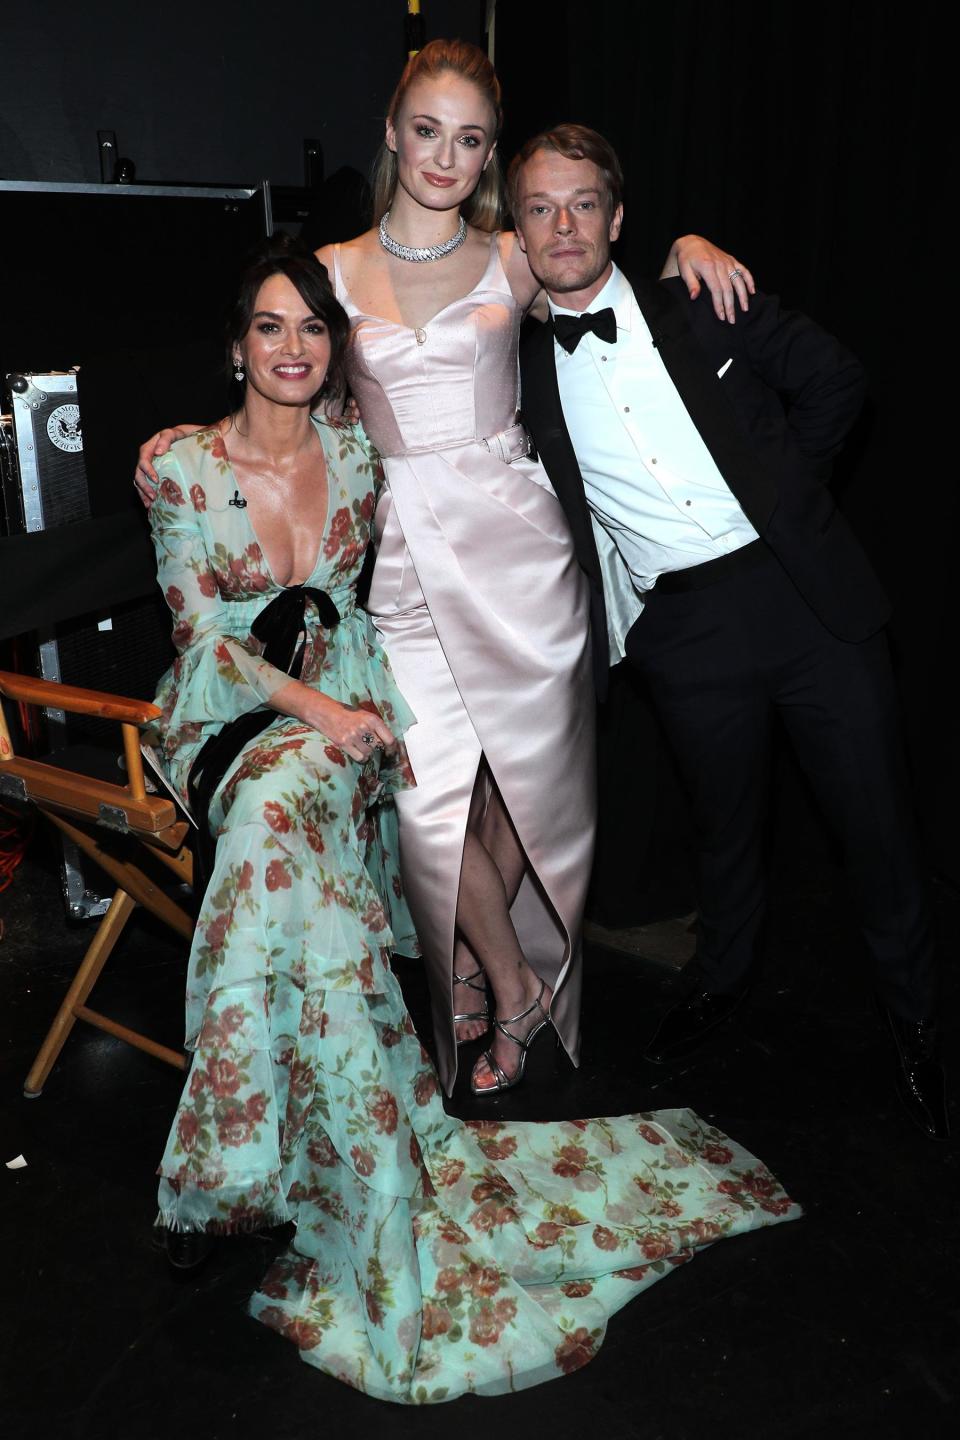 Lena Headey (Cersei Lannister), Turner, and Alfie Allen (Theon Greyjoy) backstage.